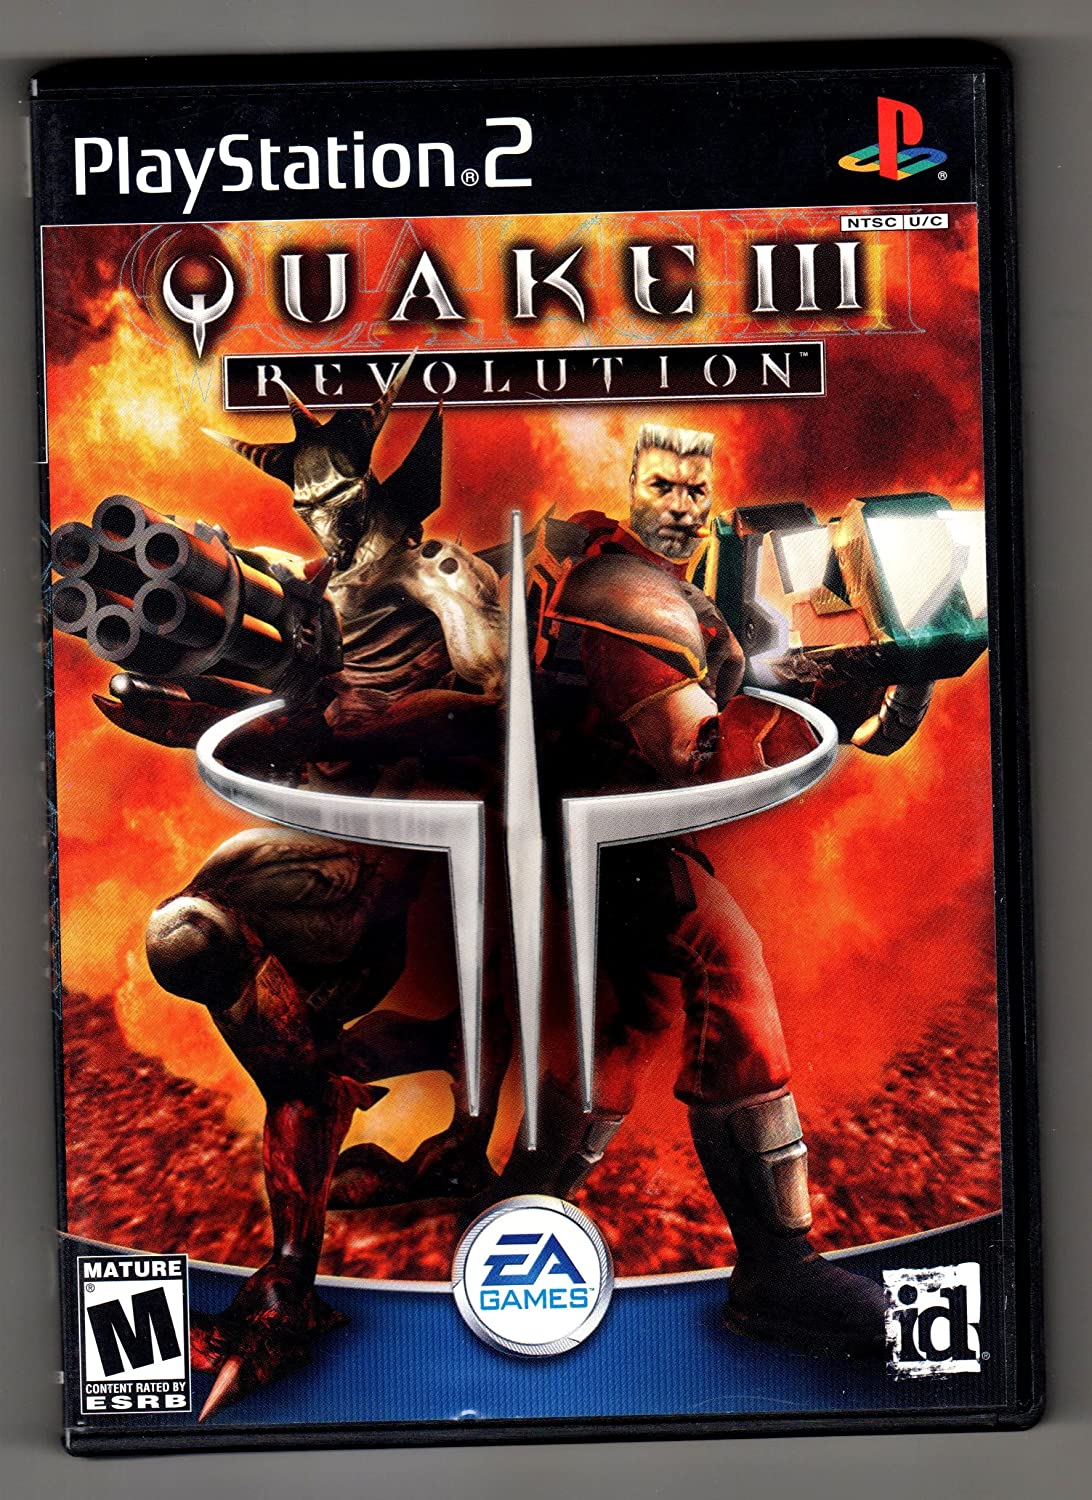 Quake III Revolution player count stats